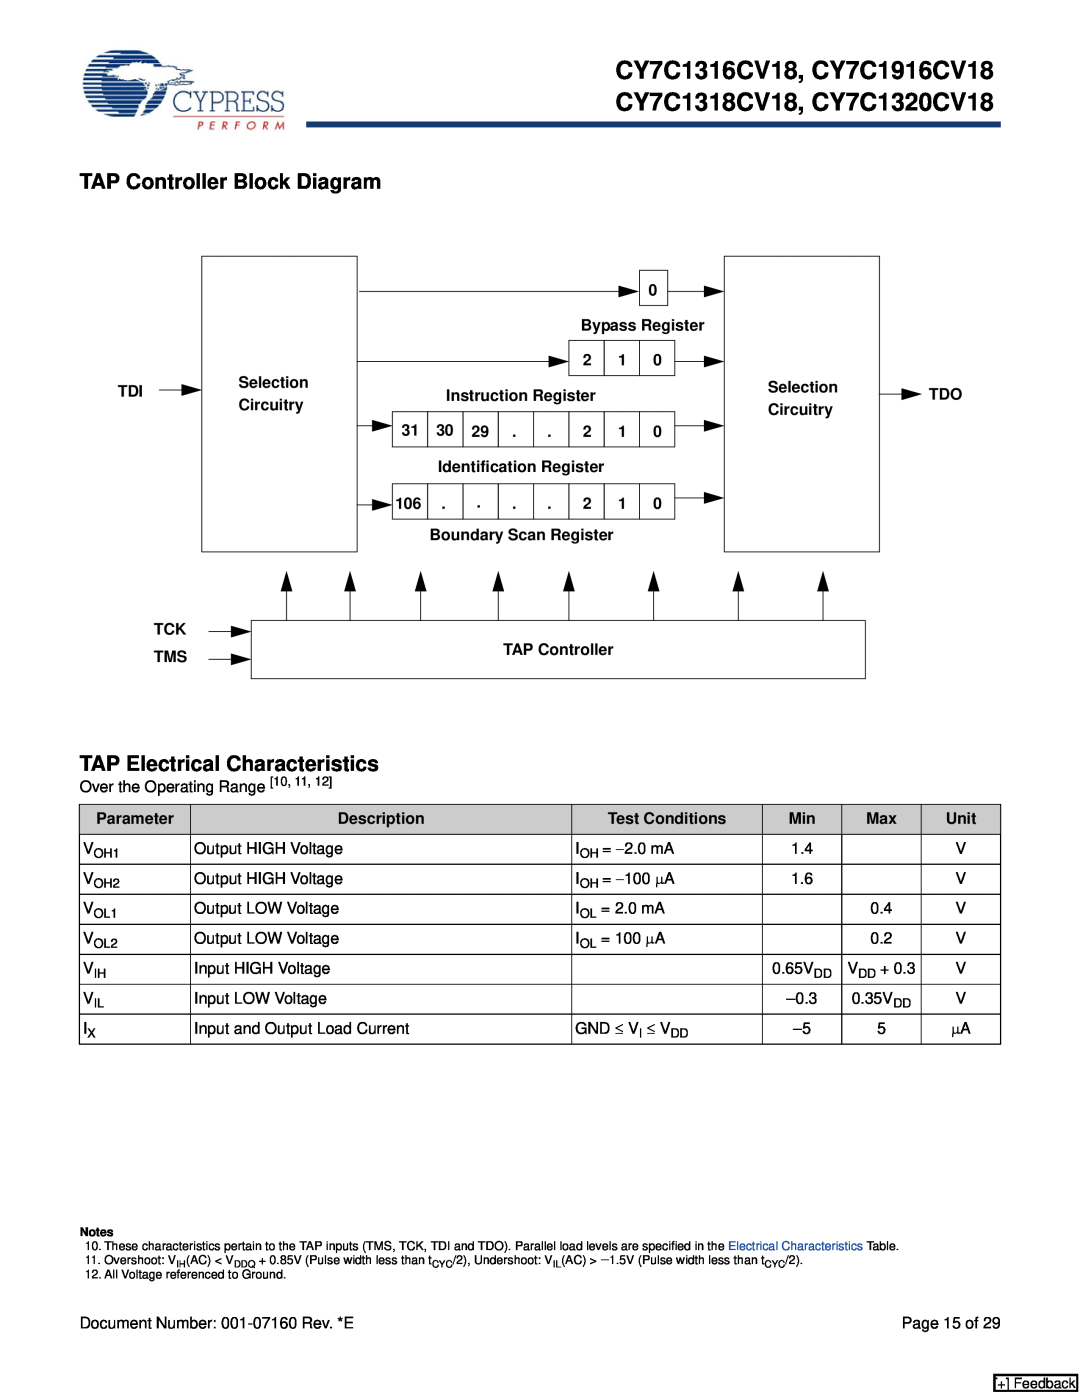 Cypress CY7C1916CV18, CY7C1318CV18, CY7C1320CV18, CY7C1316CV18 TAP Controller Block Diagram, TAP Electrical Characteristics 